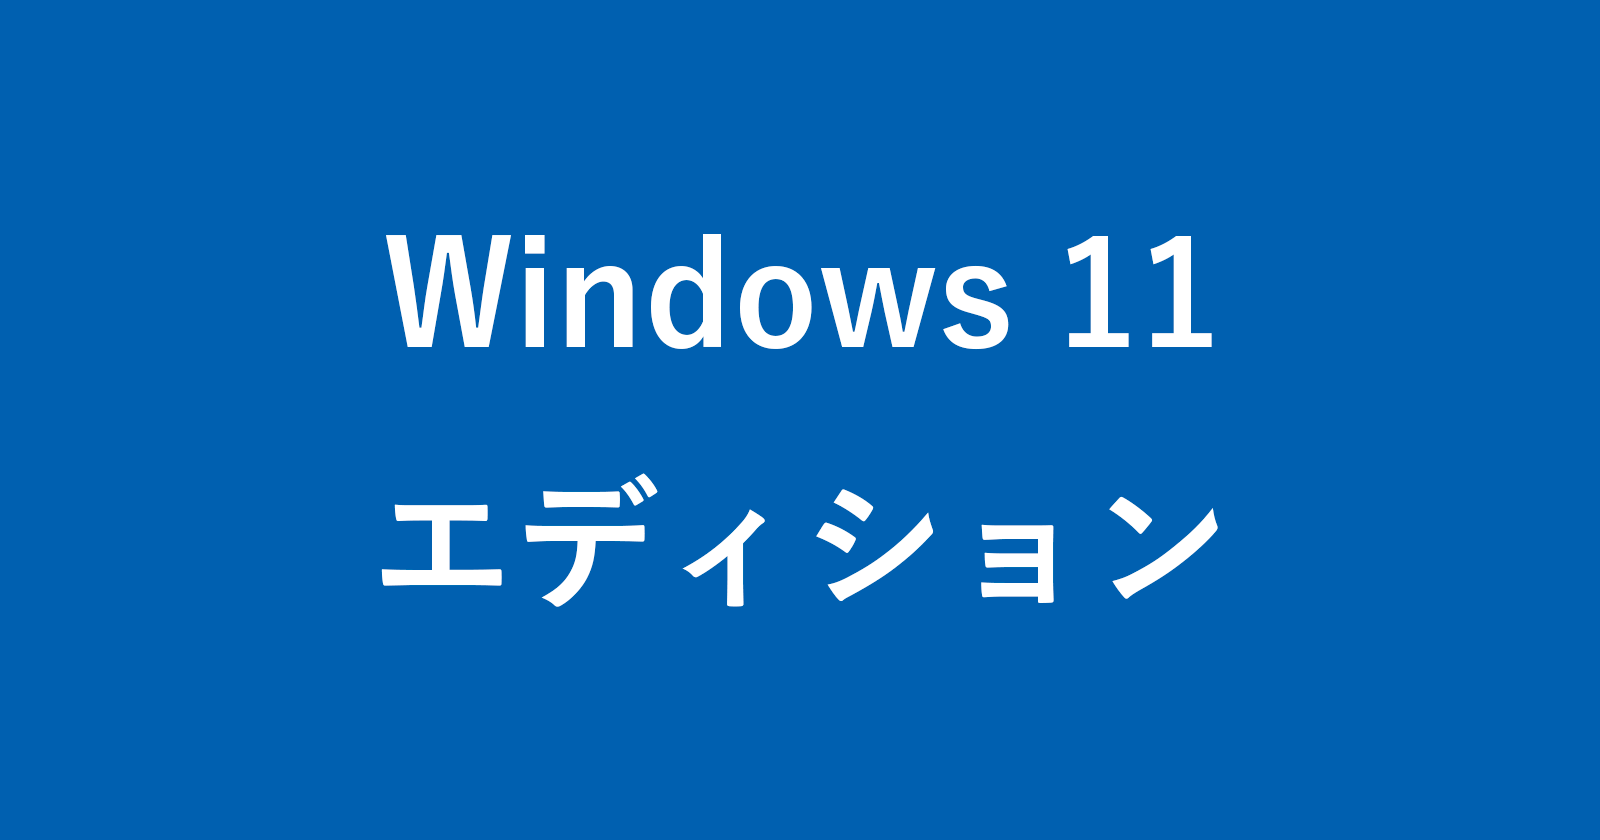 windows 11 edition